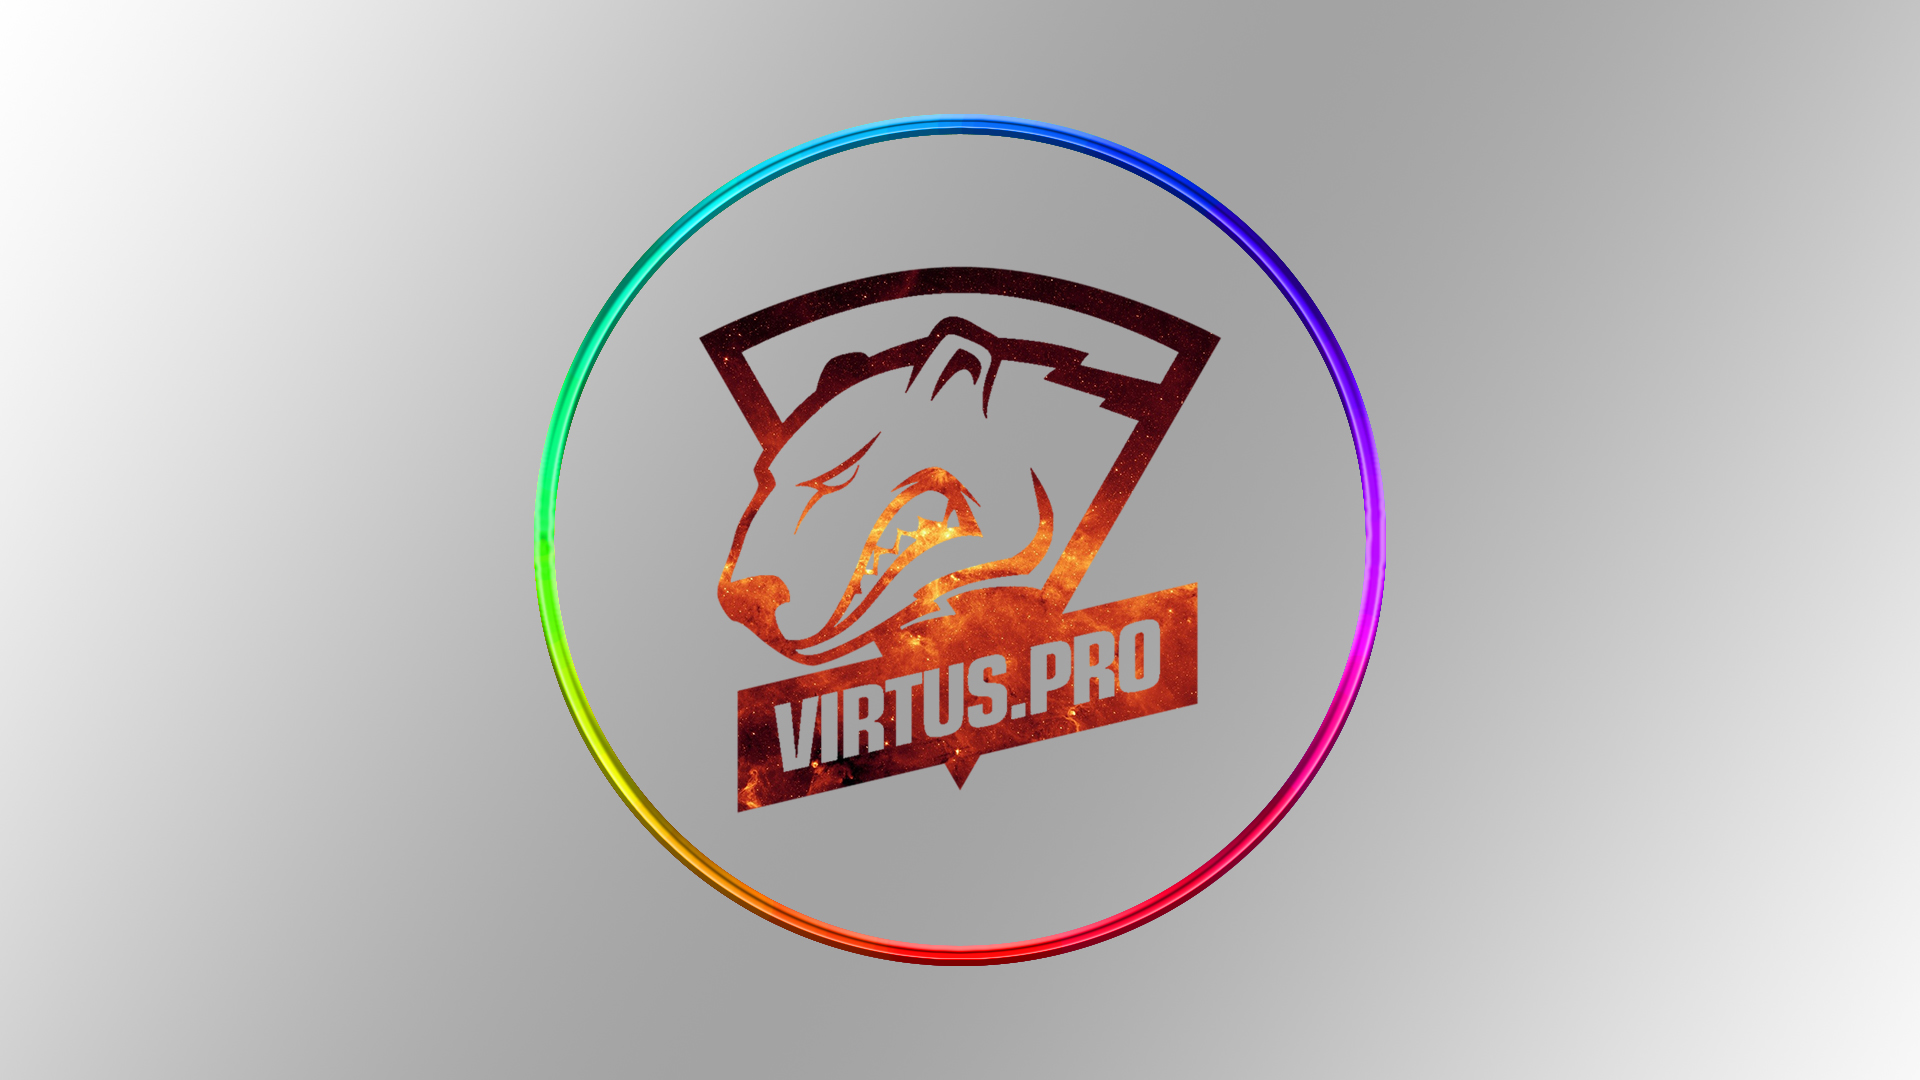 Virtus pro cs 2. Virtus Pro. Обои на рабочий стол Виртус про. КС го Virtus Pro. Команда Virtus Pro.